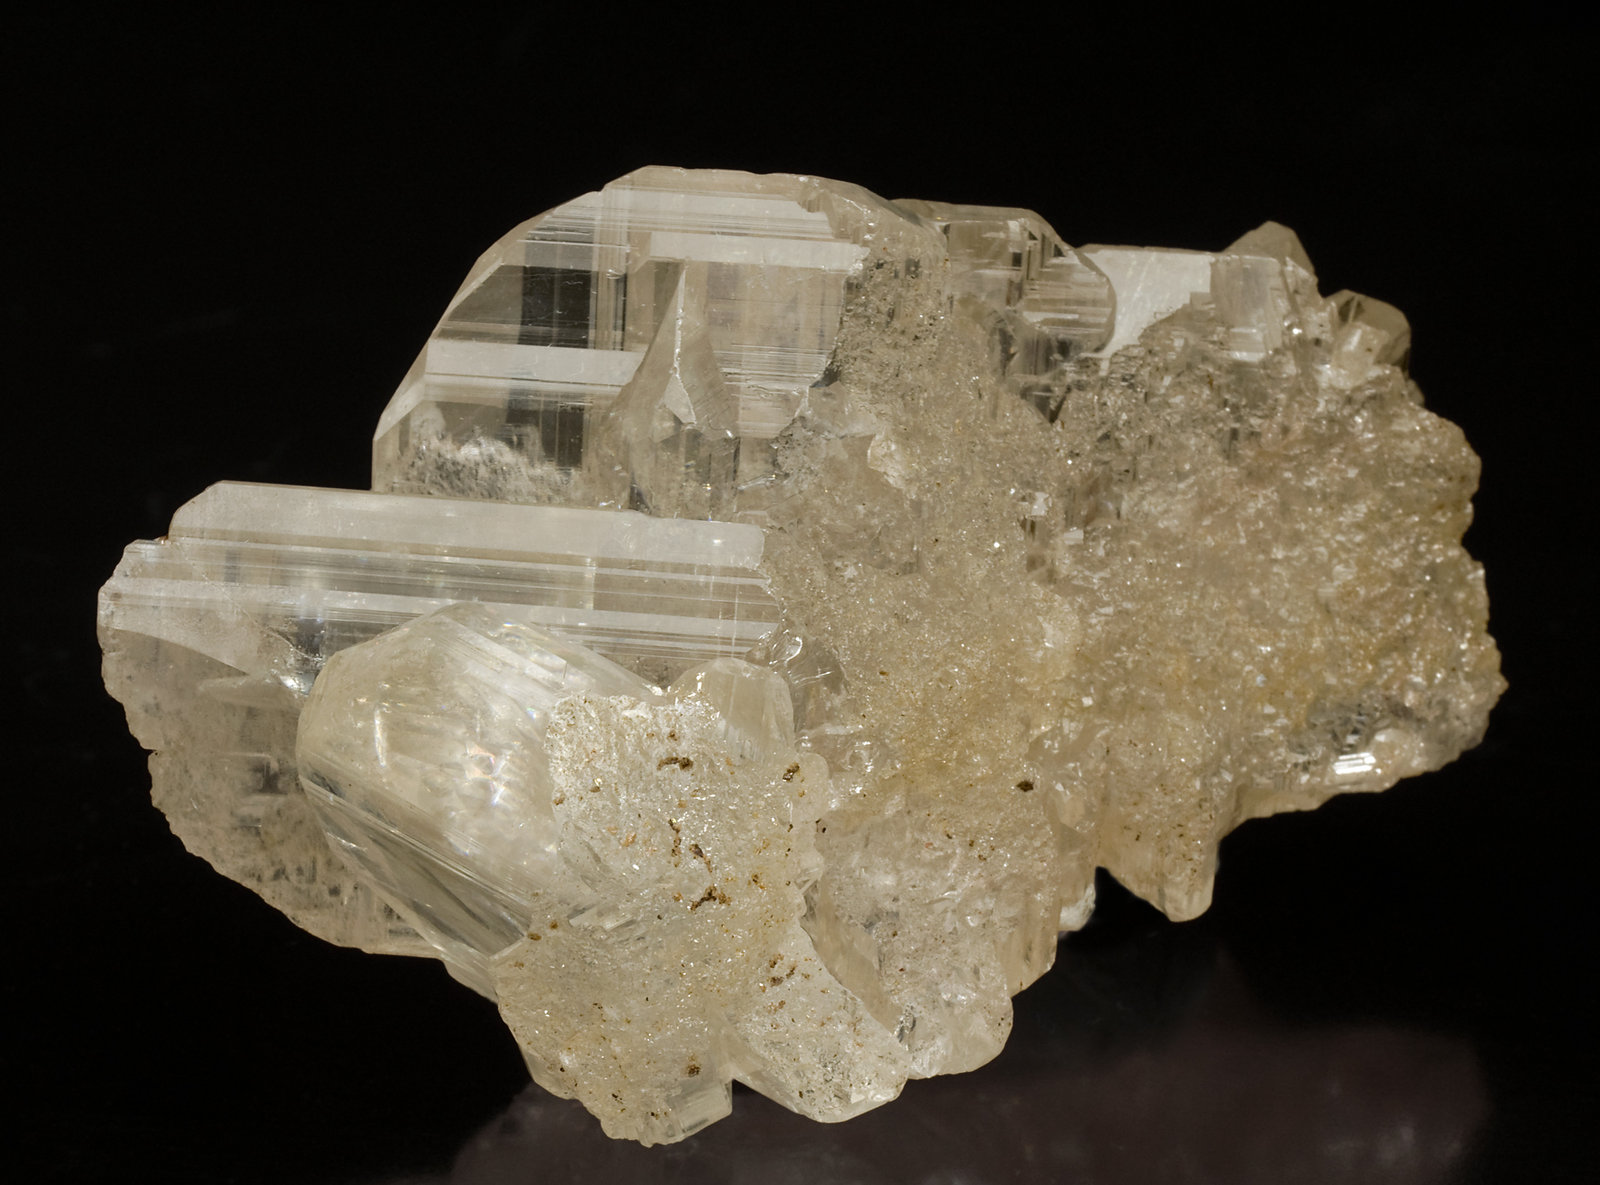 specimens/s_imagesV7/Cerusite-ND76V7f.jpg